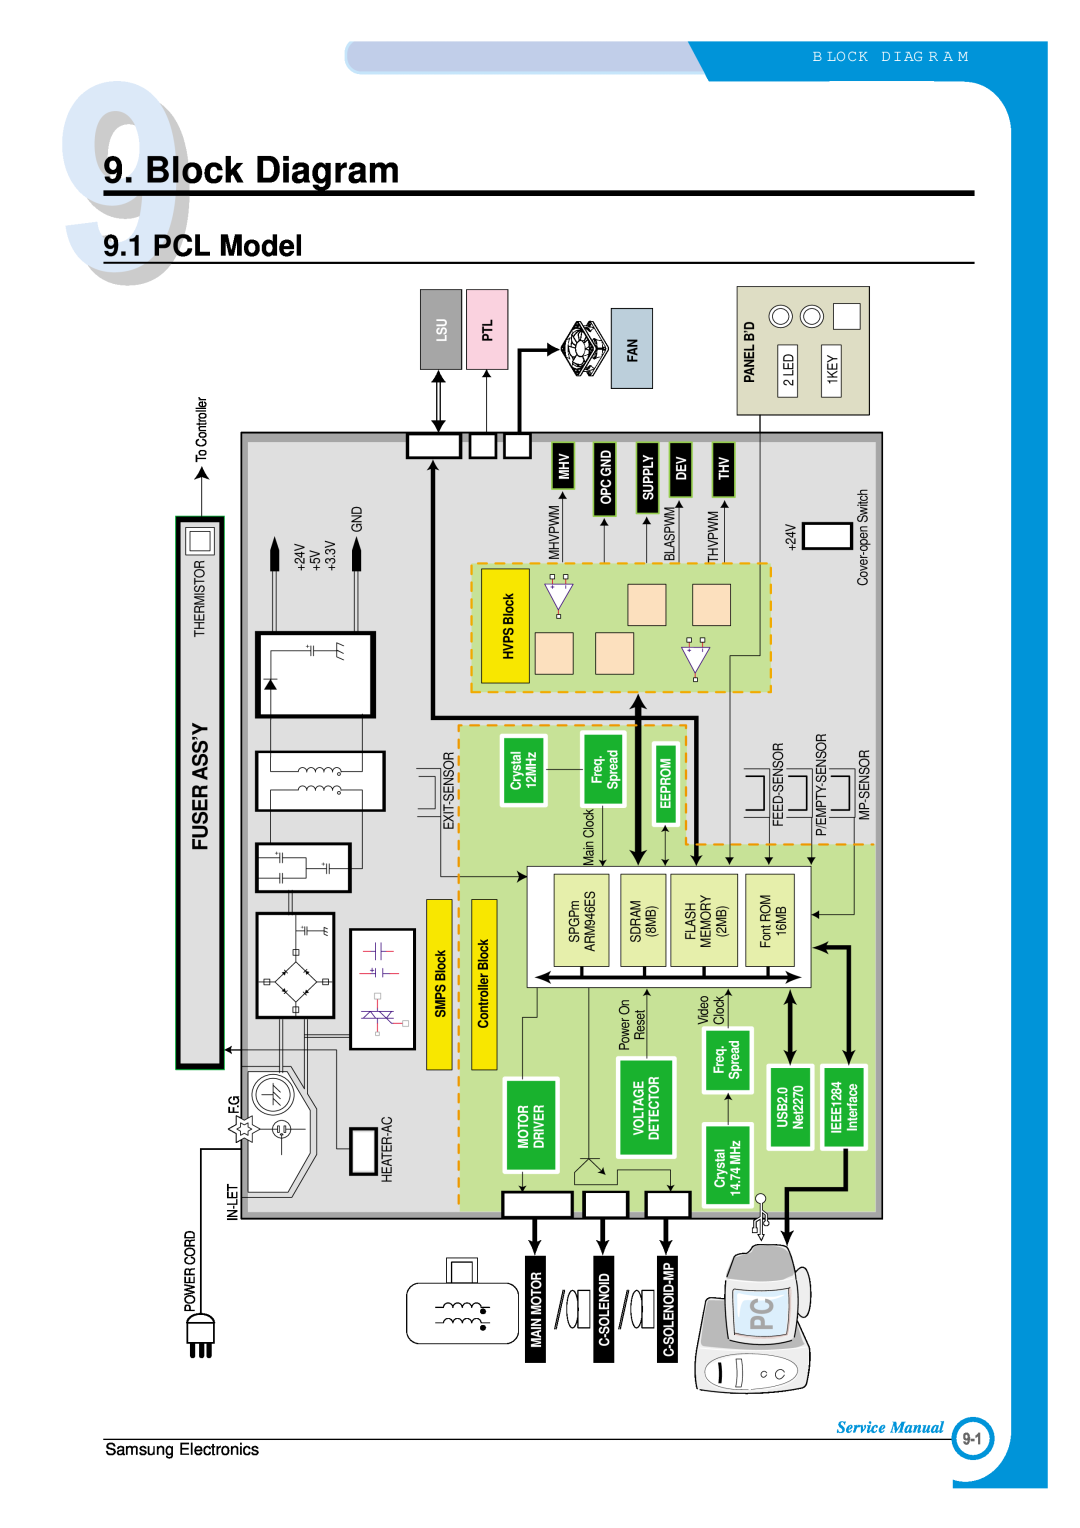 Samsung ML-1700 9.9Block Diagram 9.1 PCL Model, Fuser Ass’Y, Samsung Electronics, Service Manual, B Lock Diag R A M, Motor 